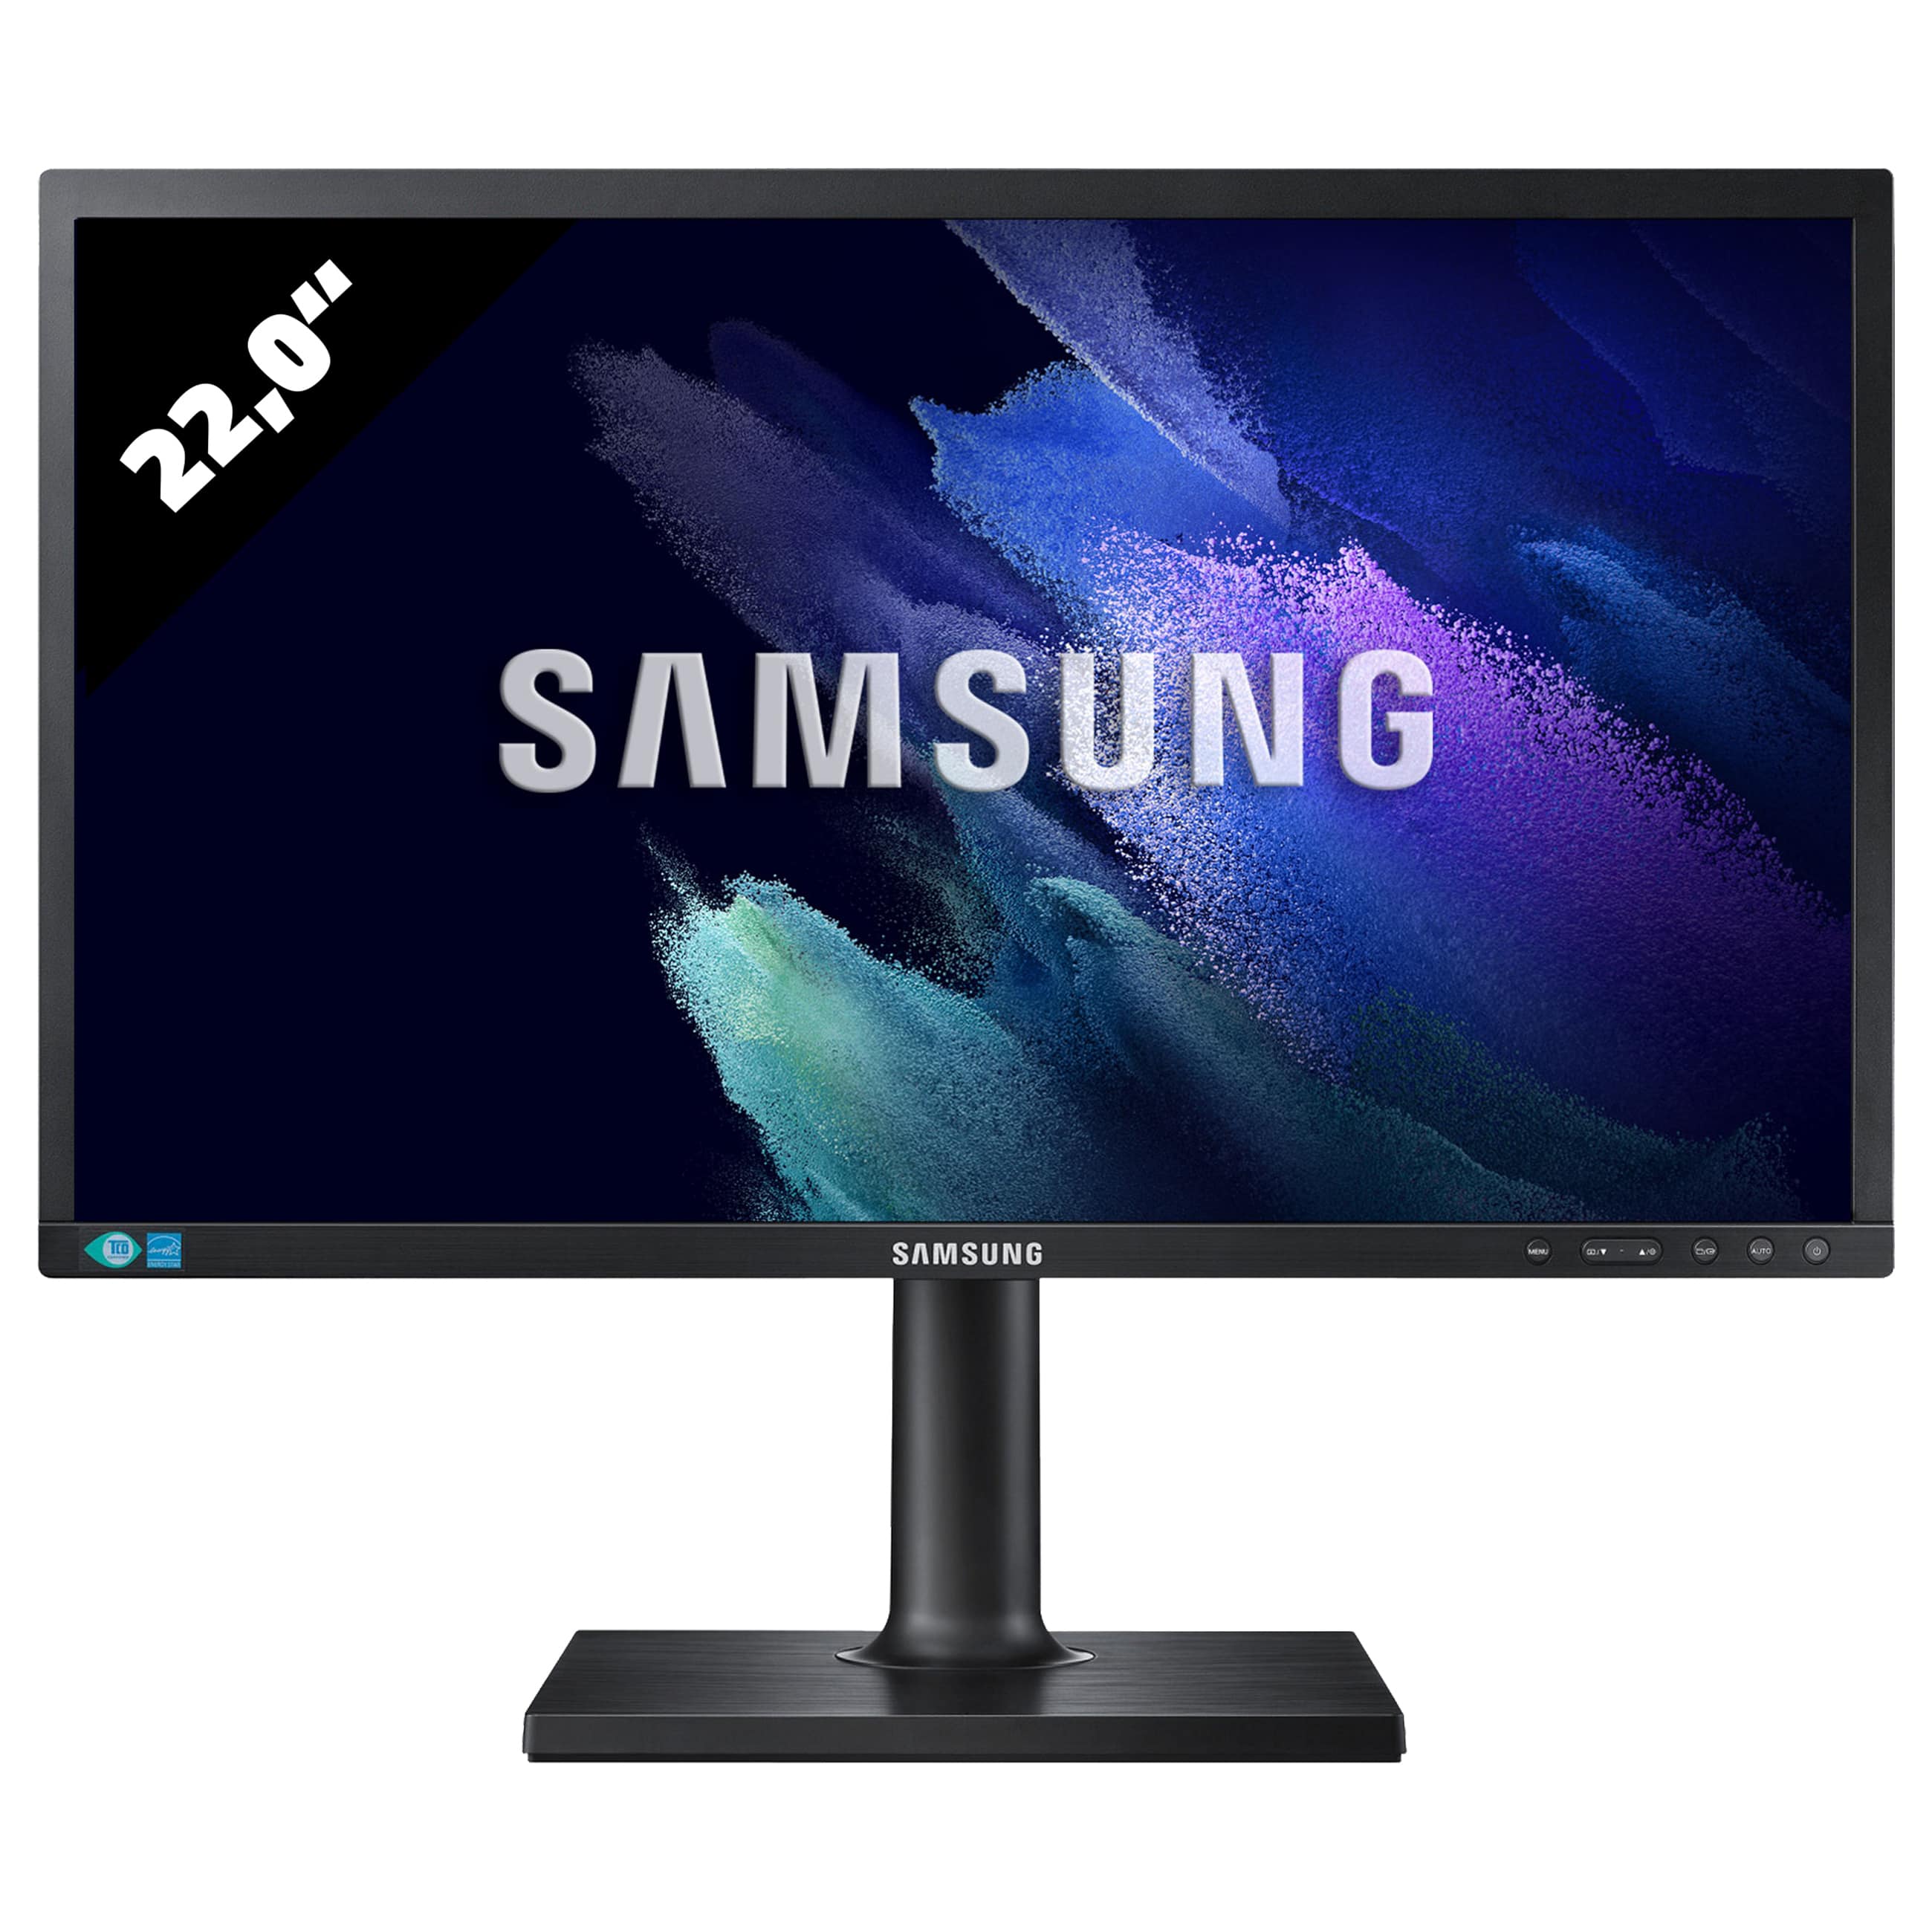 Samsung Color Display Unit S22E450 - 1680 x 1050 - WSXGA+ - 22,0 Zoll - 5 ms - Schwarz